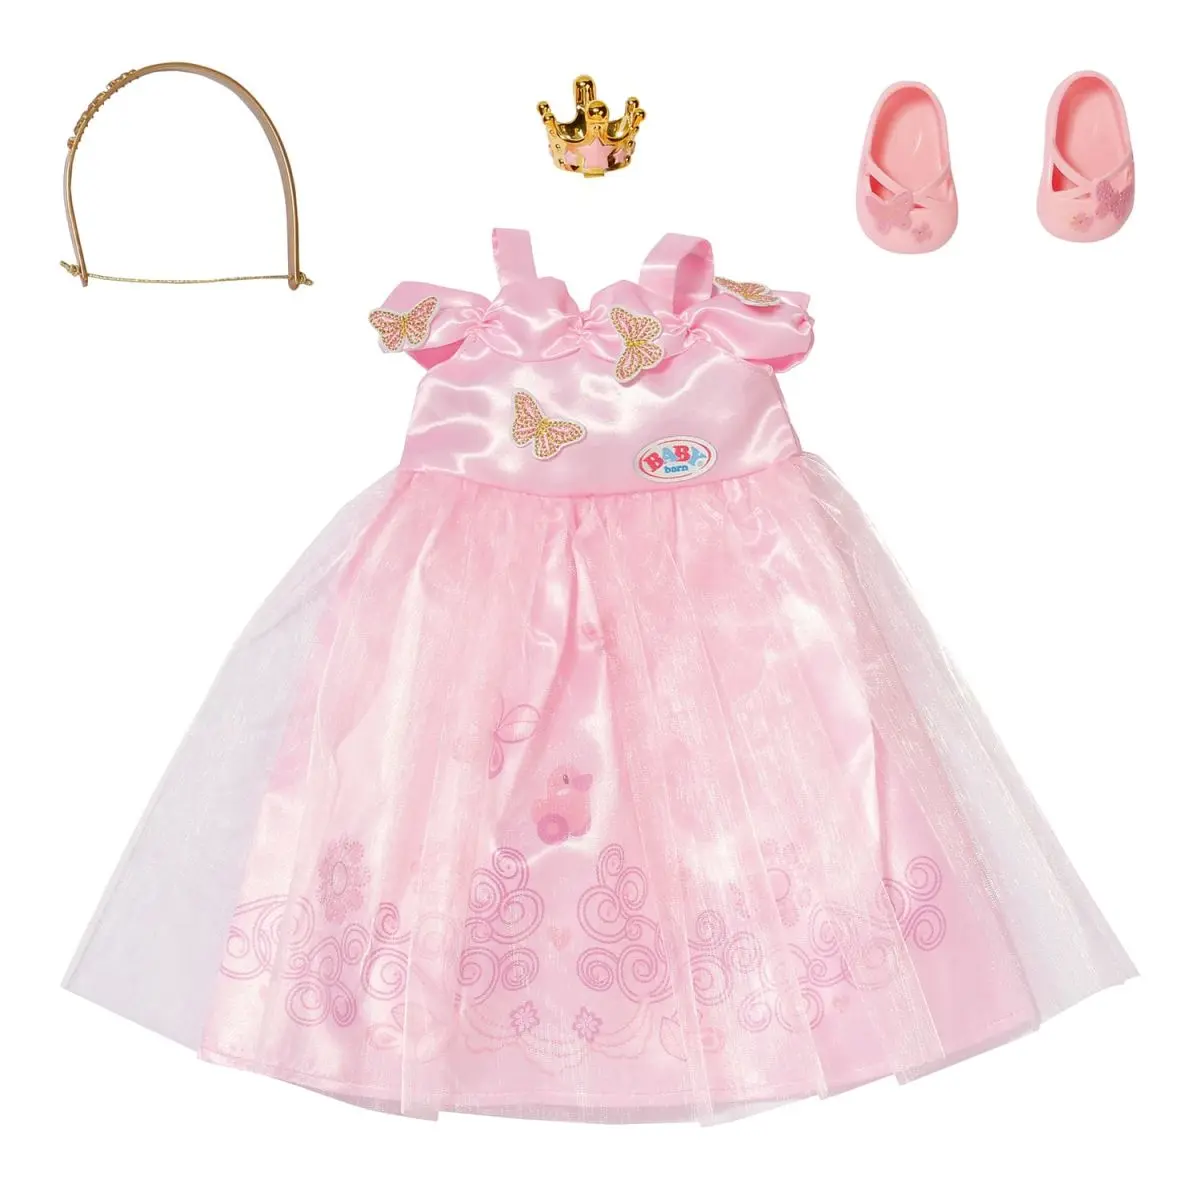 Baby Born Платье Принцессы - фото